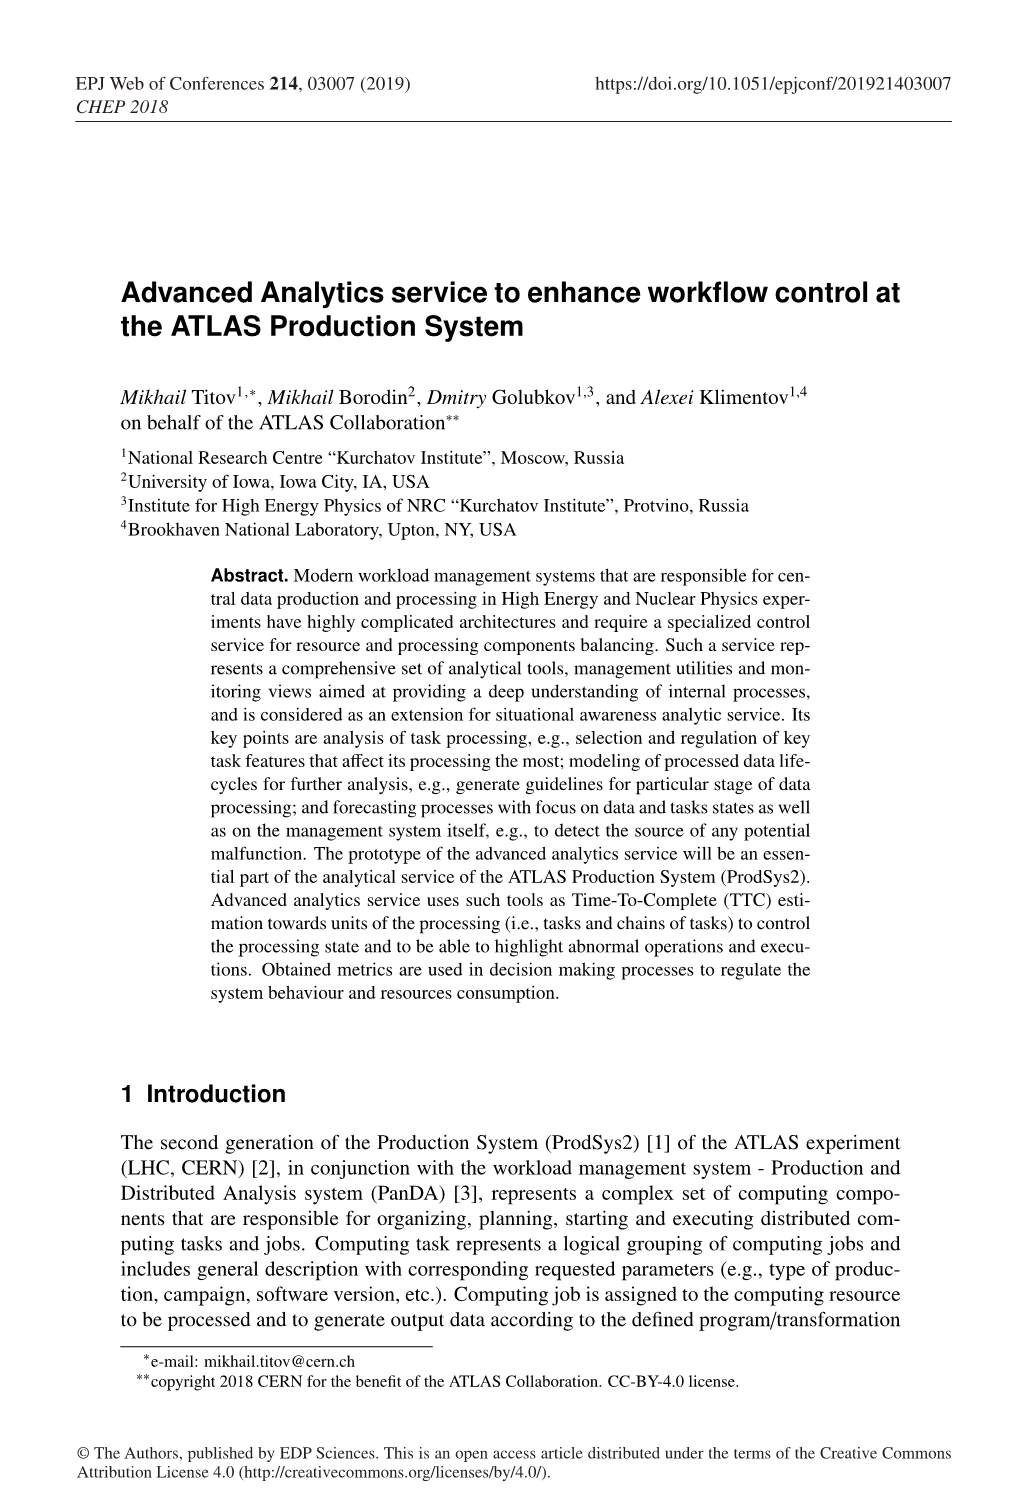 Advanced Analytics Service to Enhance Workflow